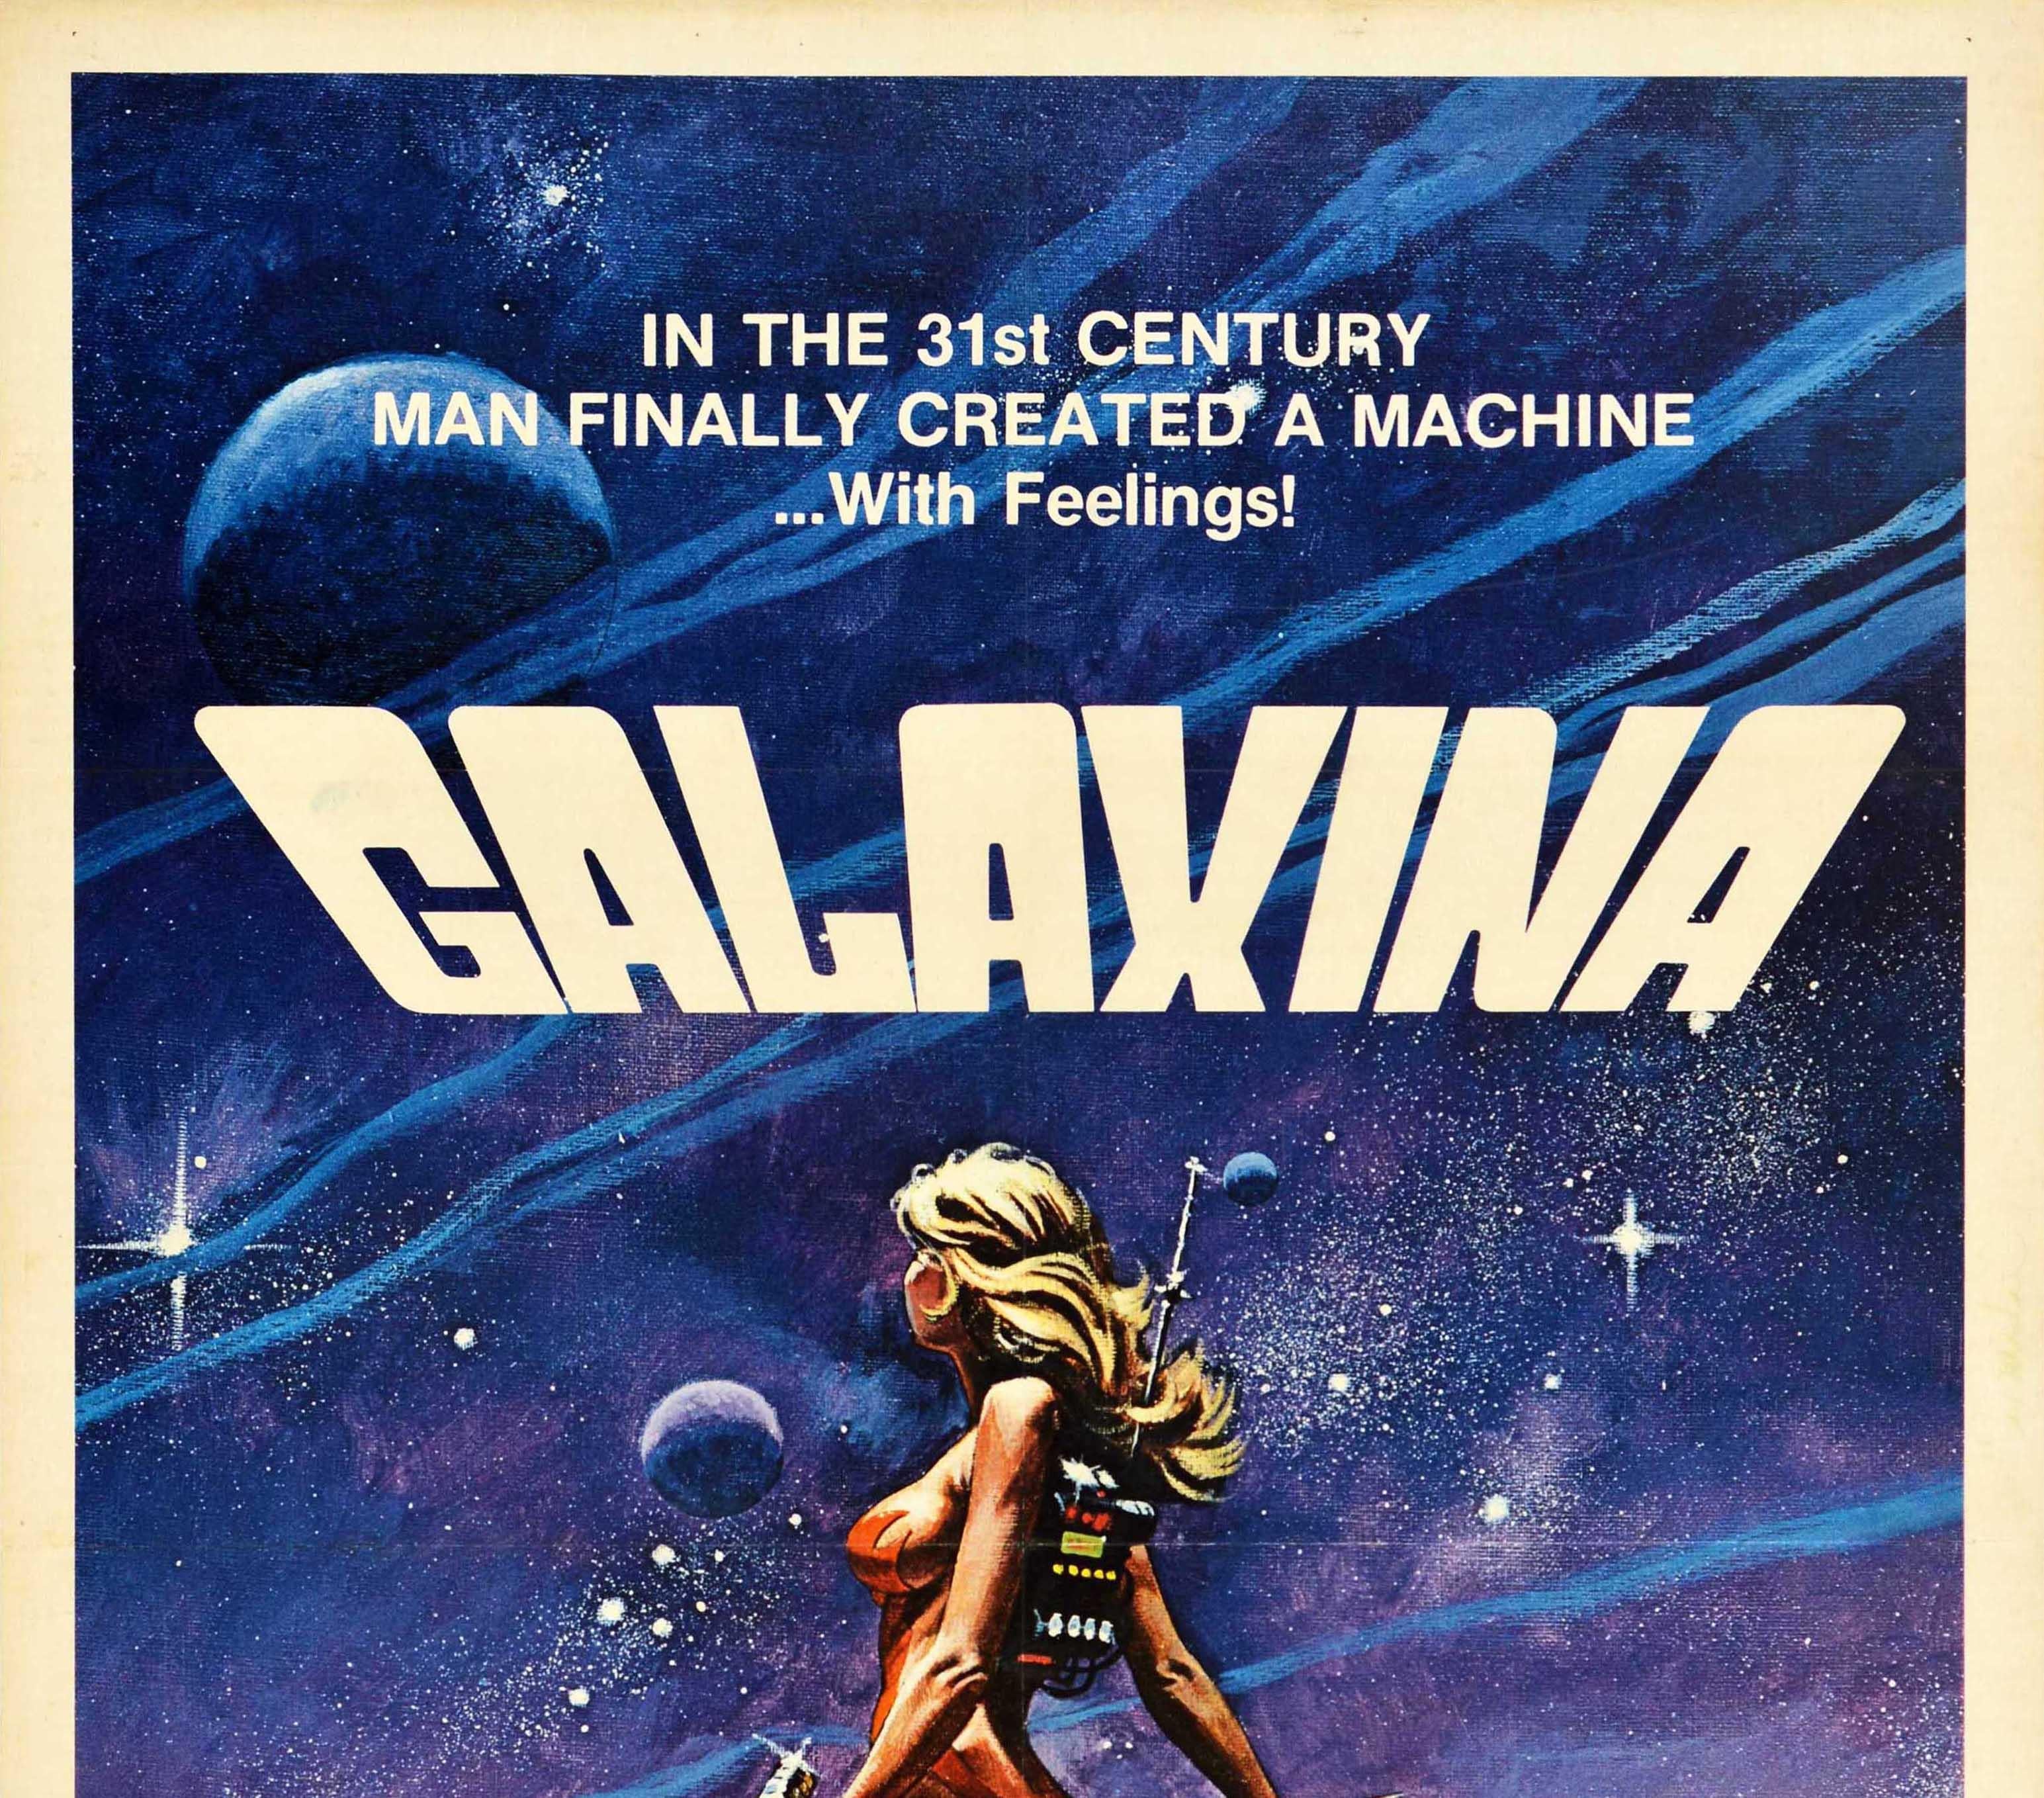 1980s space movie